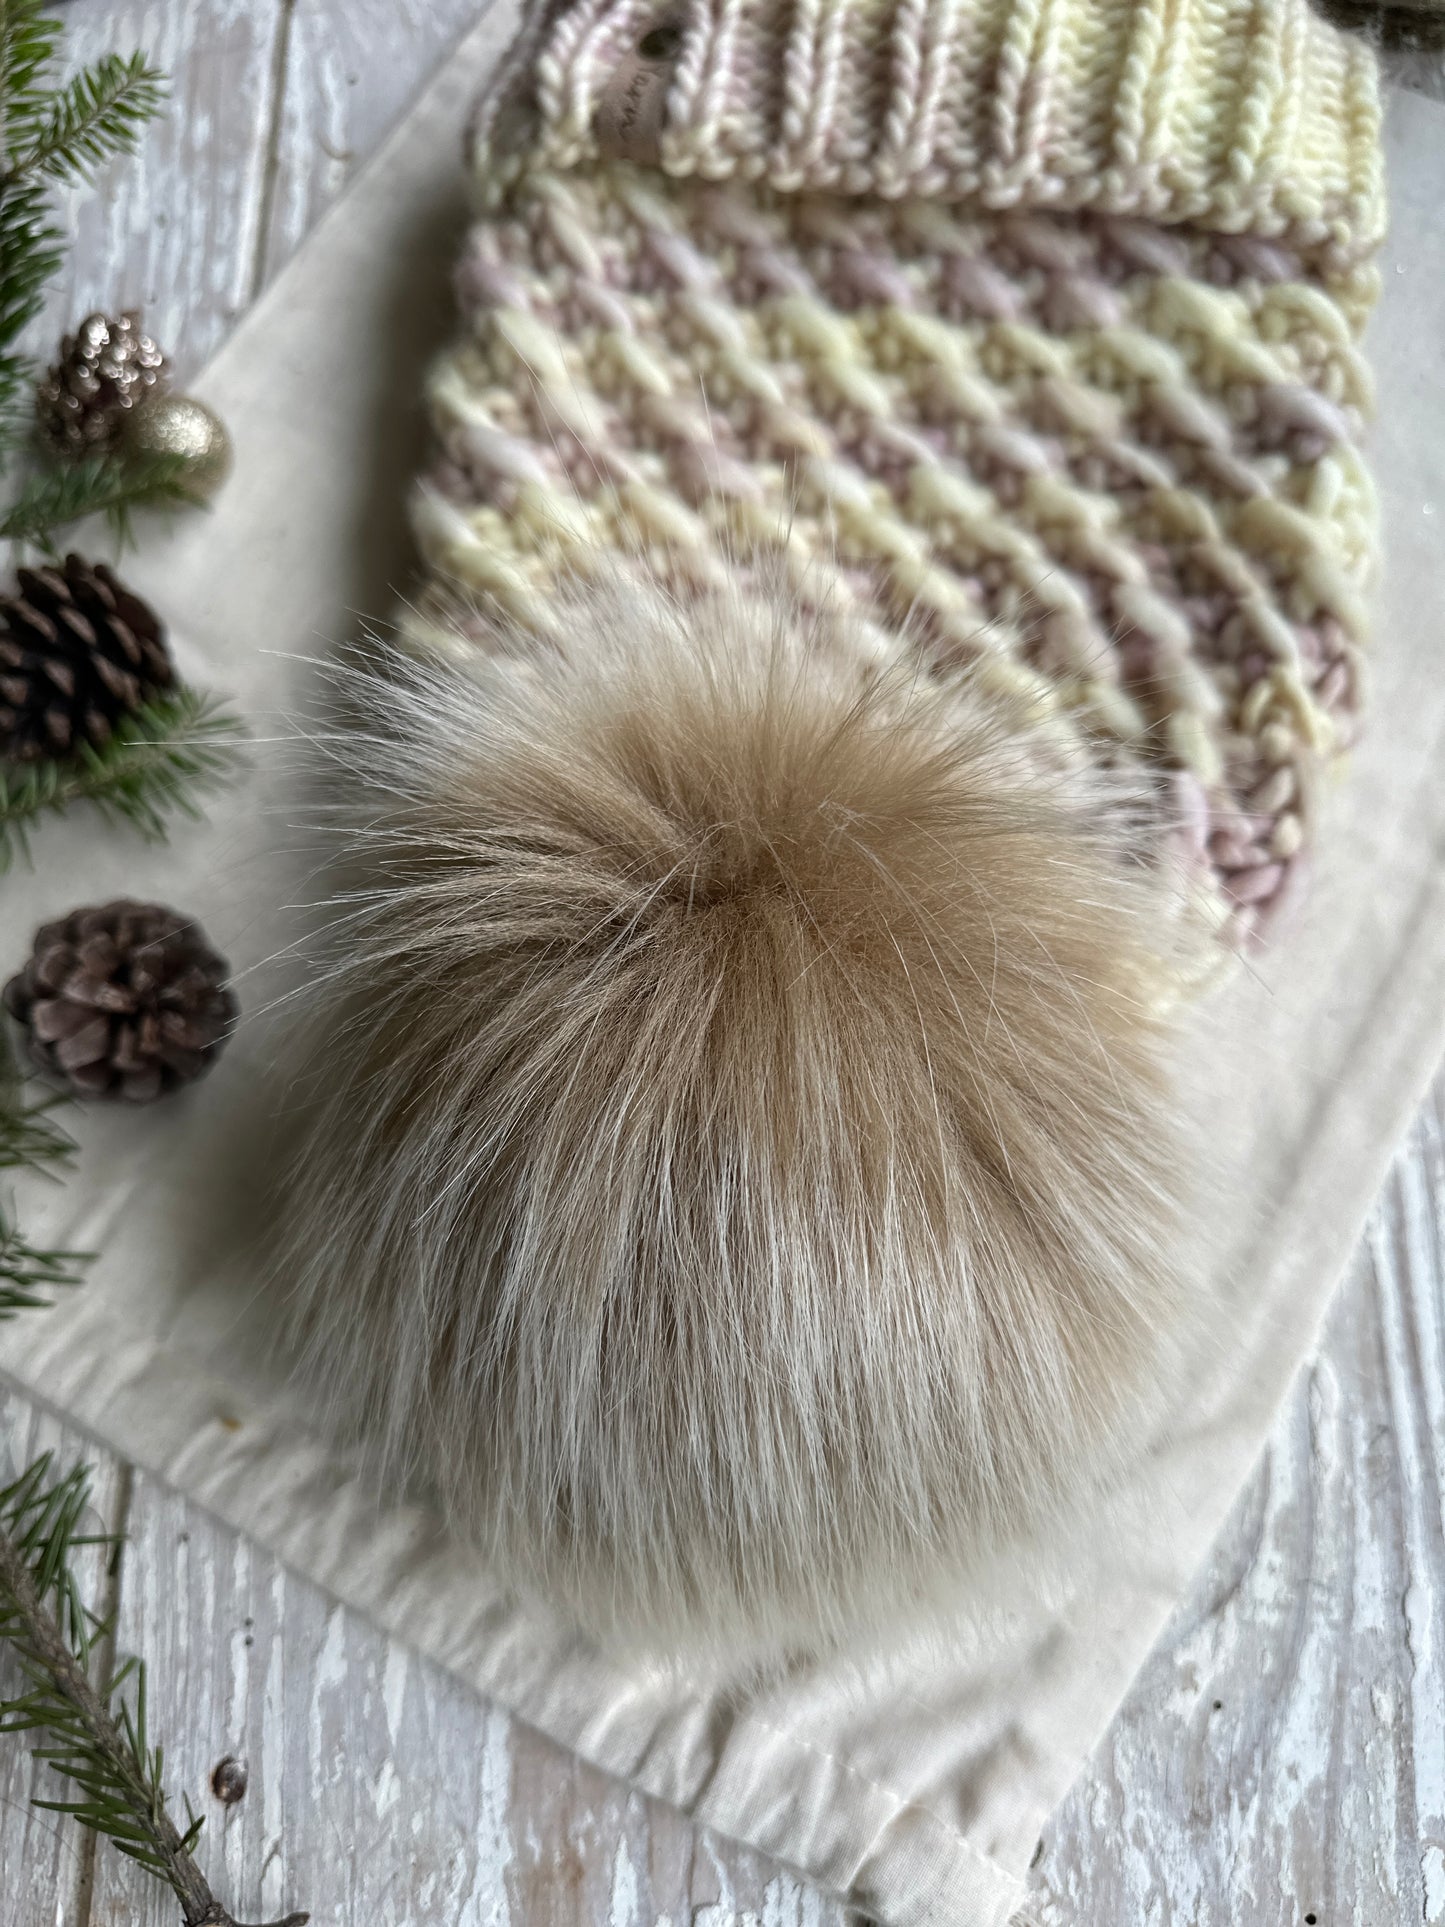 Merino wool knit hat and mitten set